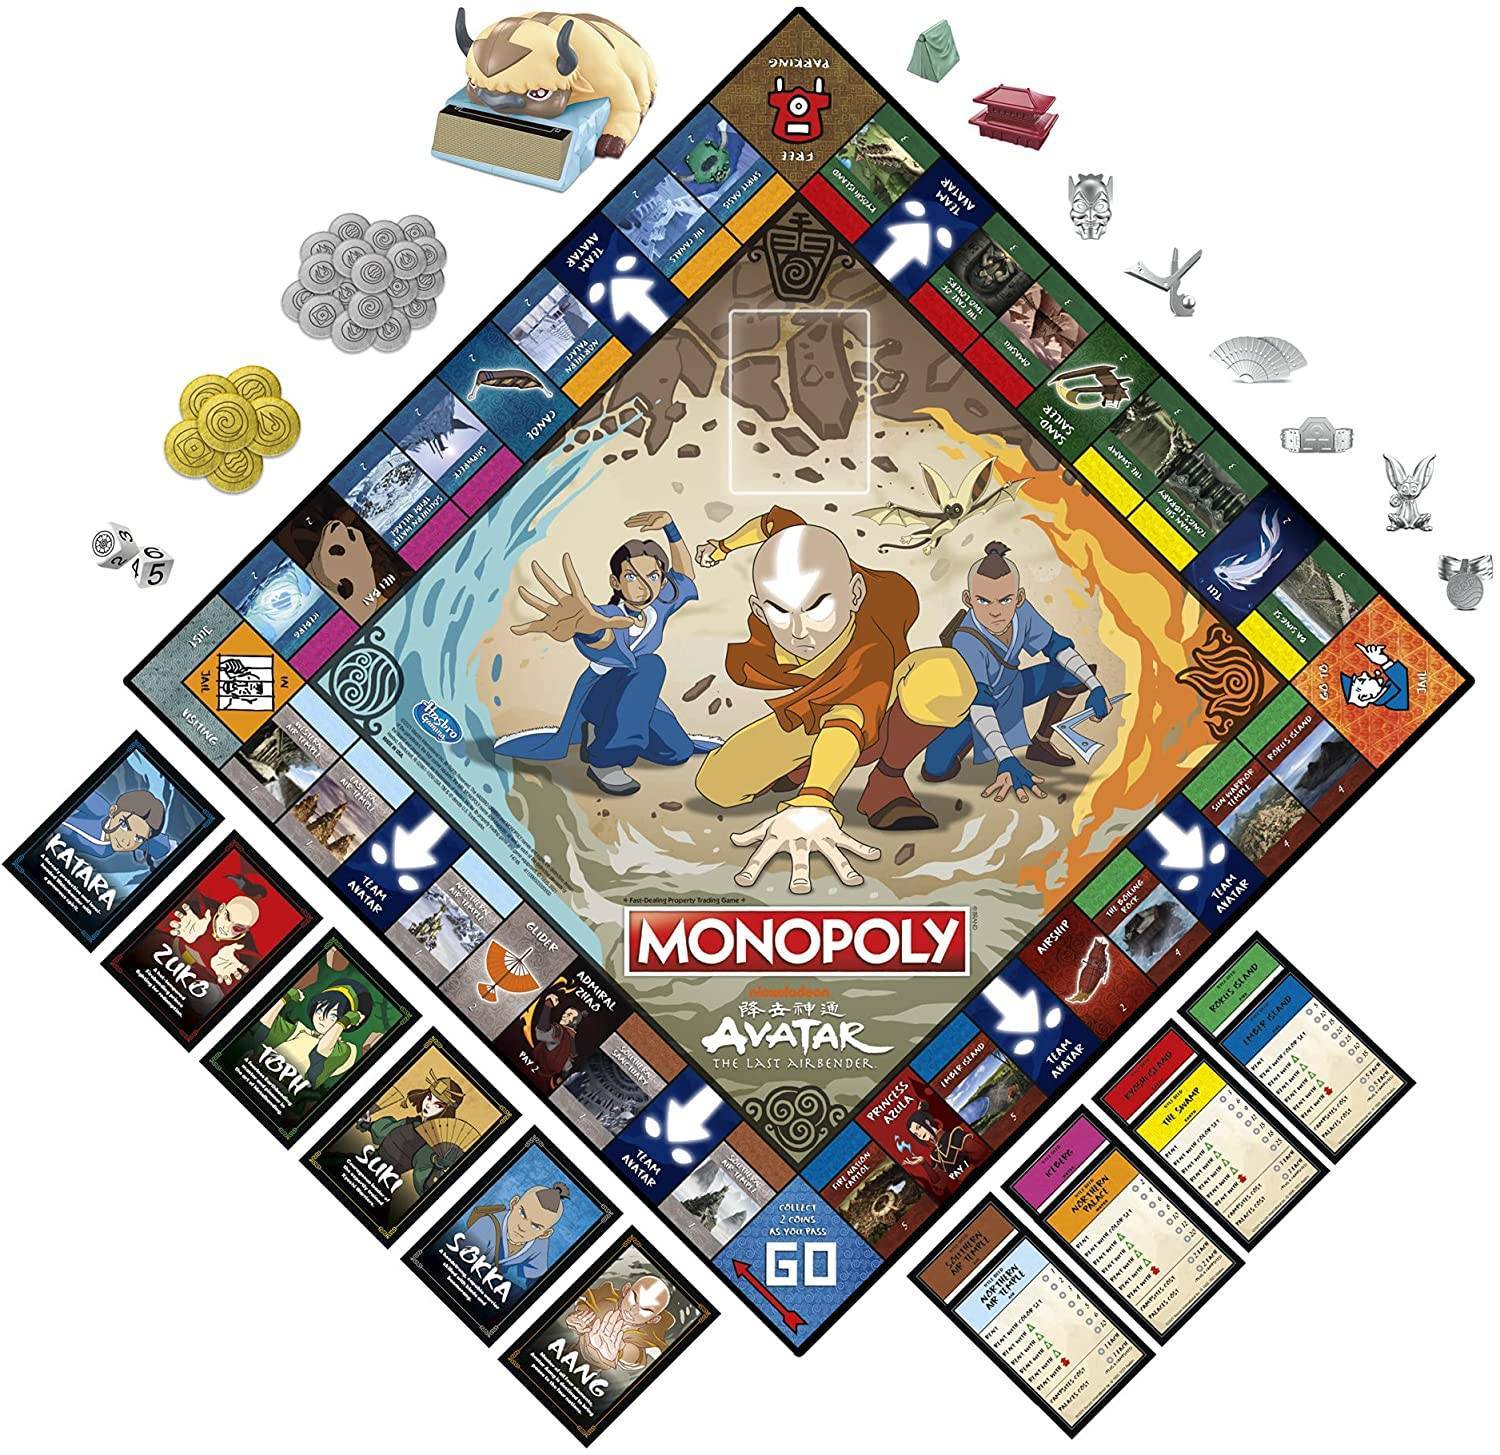 Monopoly Avatar board